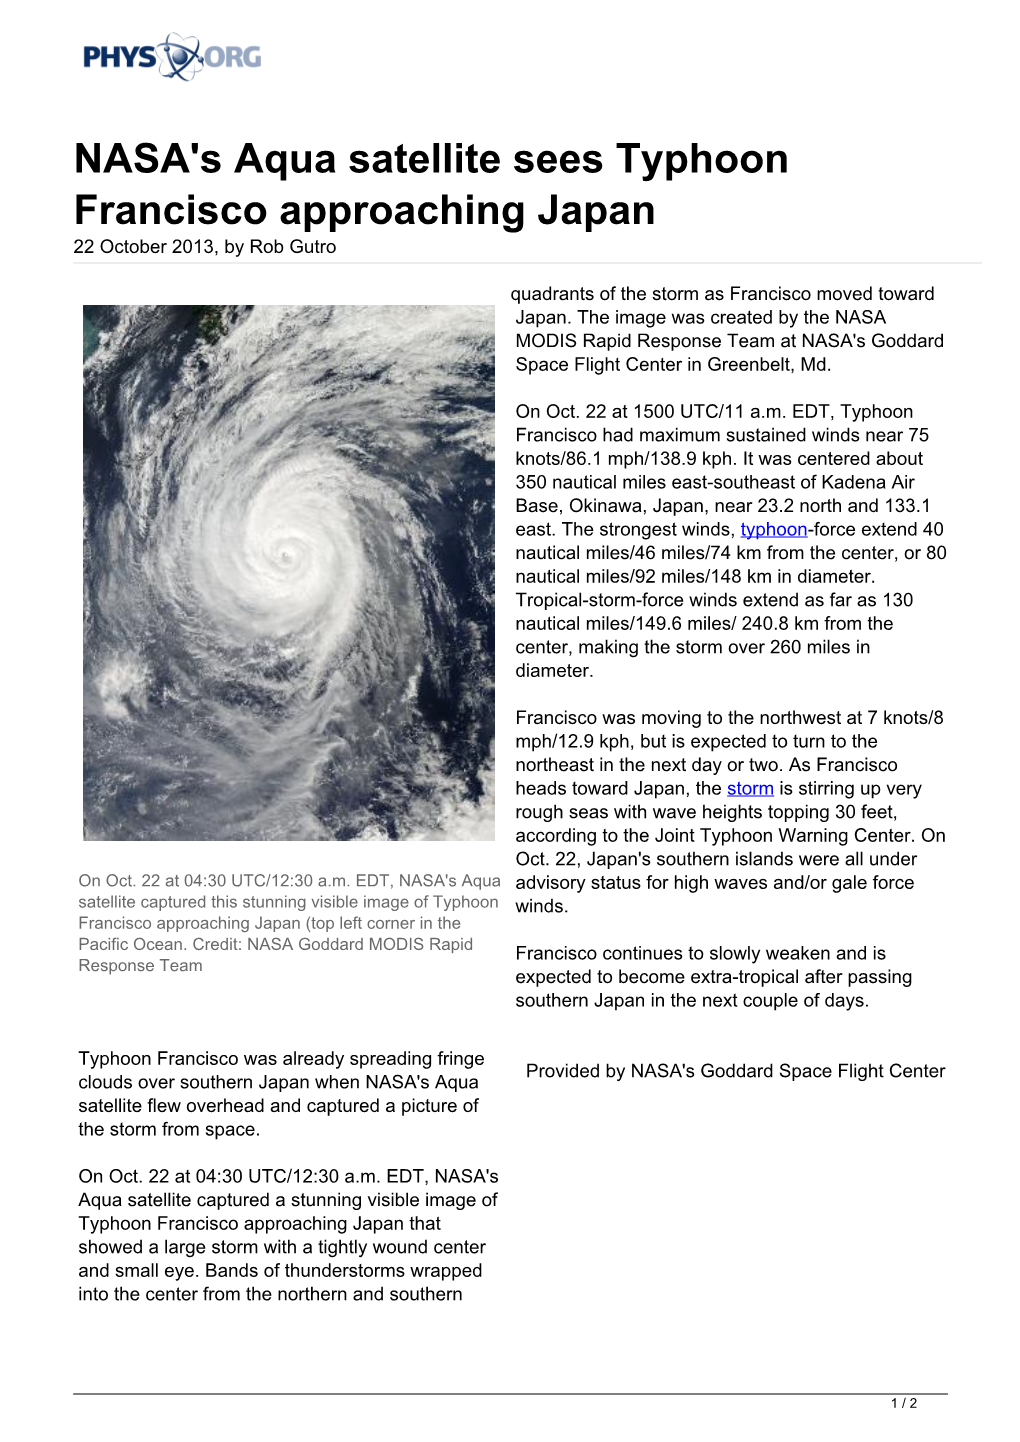 NASA's Aqua Satellite Sees Typhoon Francisco Approaching Japan 22 October 2013, by Rob Gutro